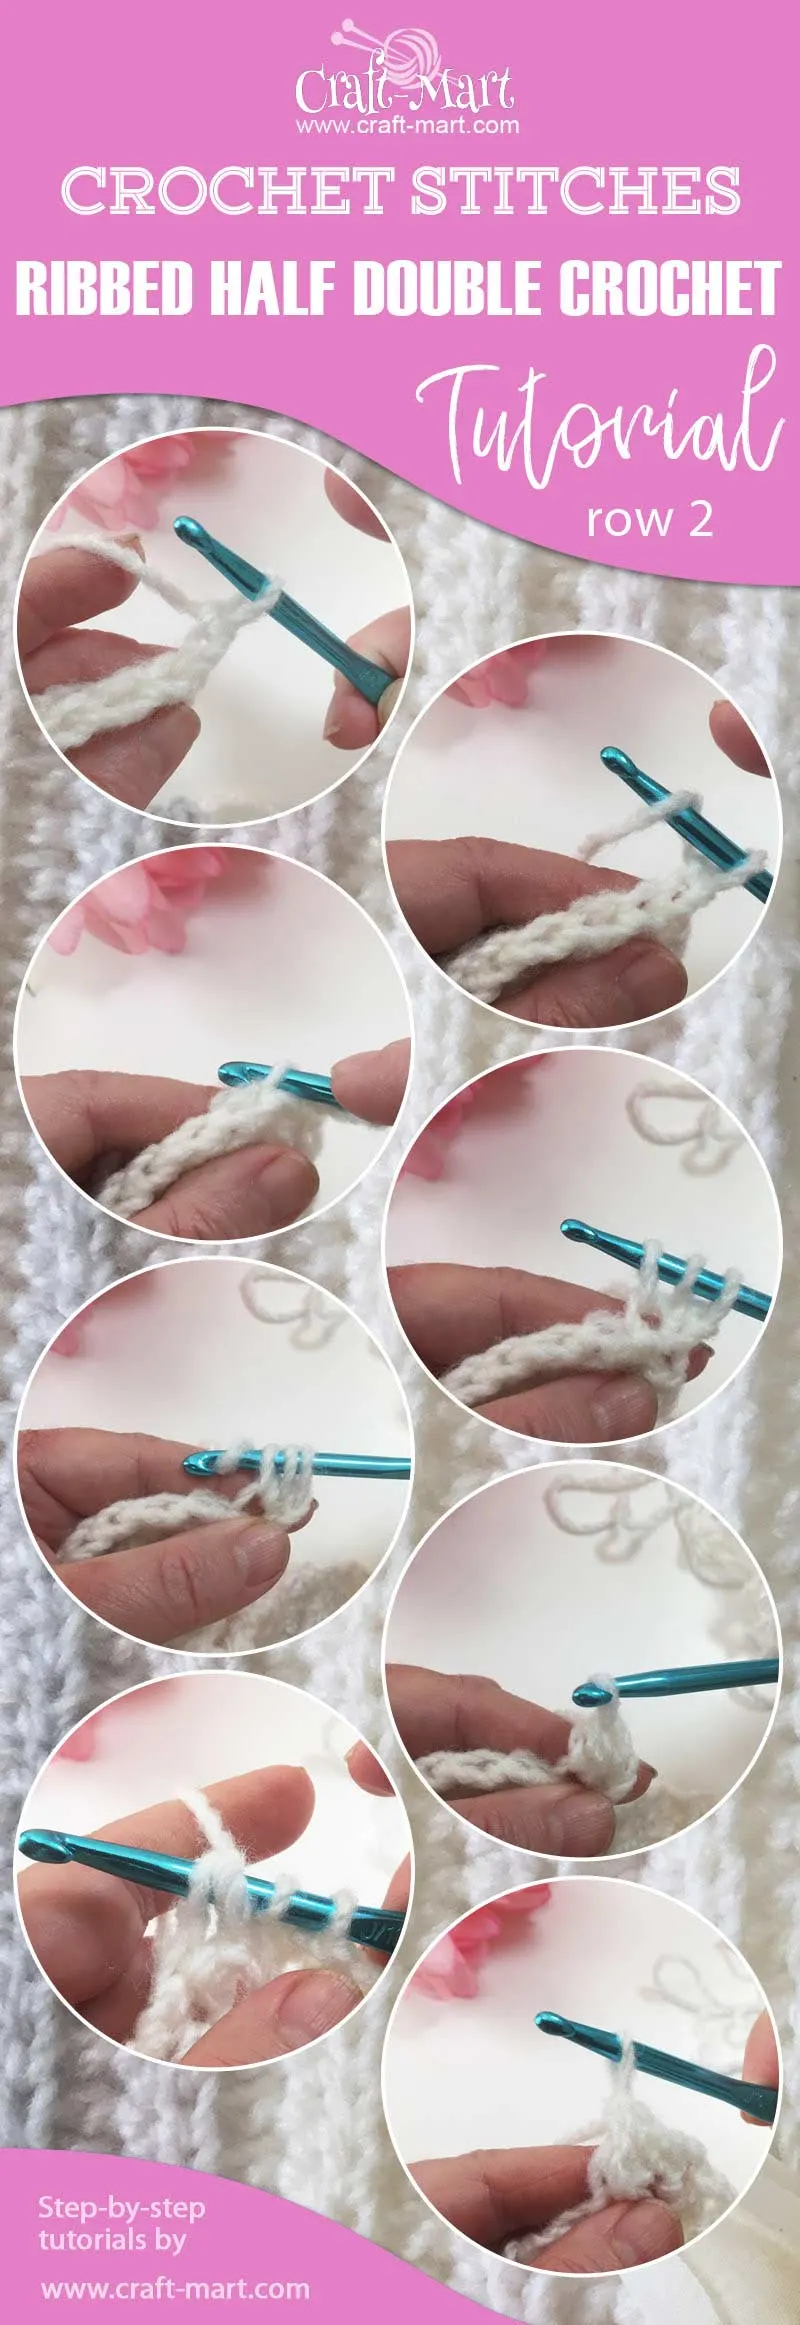 Ribbed Half Double Crochet Stitch